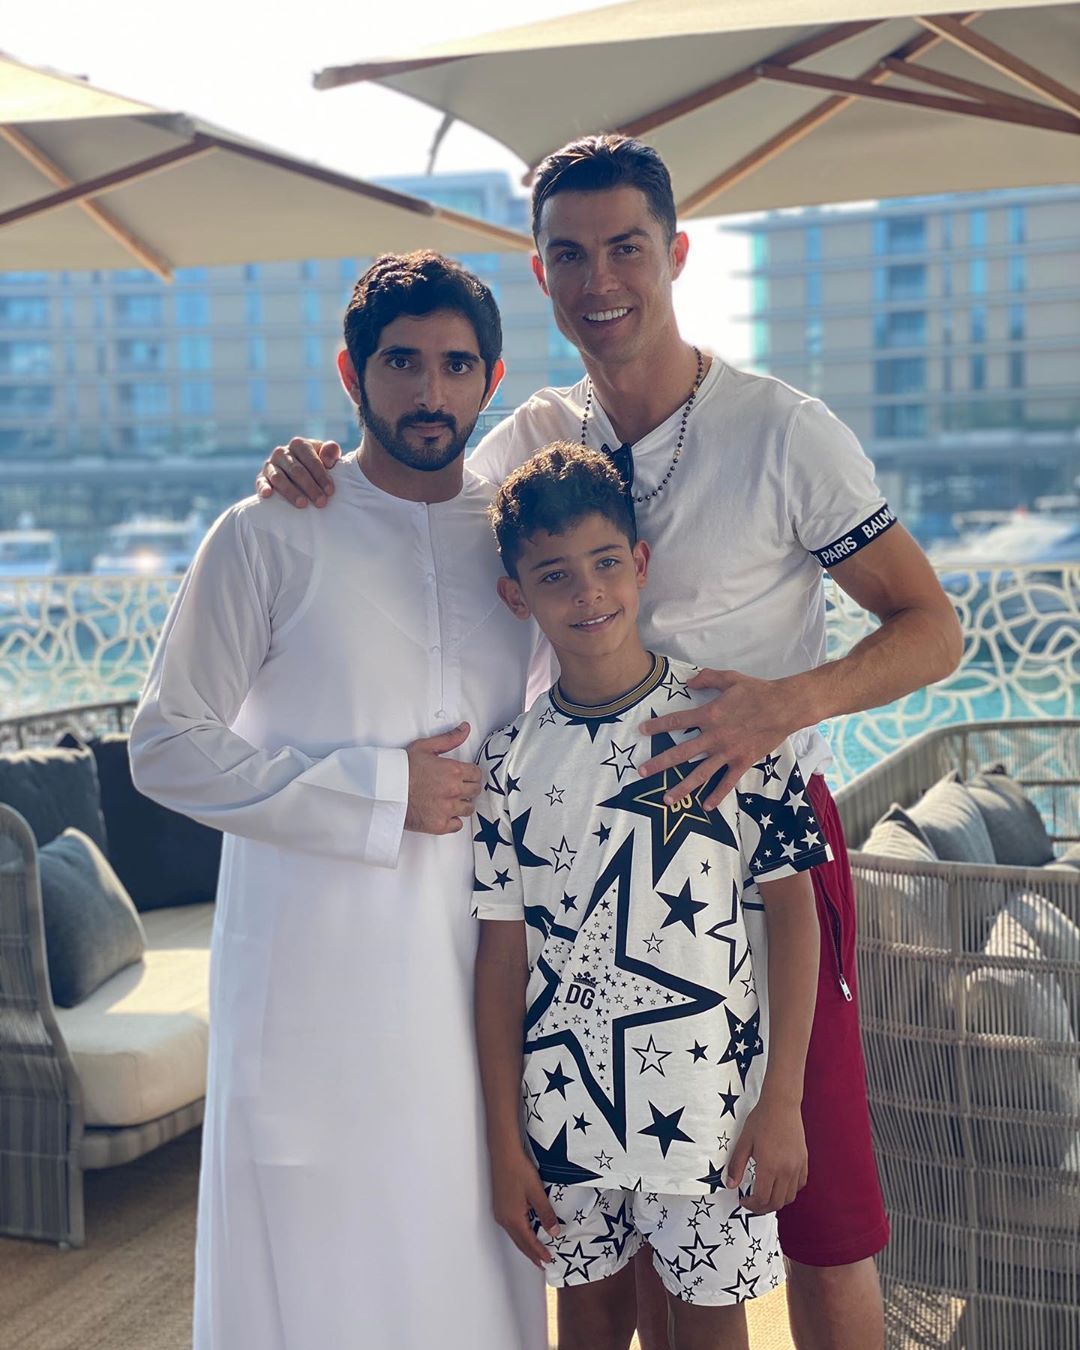 Cristiano Ronaldo on Instagram: “Always great to see you my friend. Ronaldo, Cristiano ronaldo, Ronaldo junior